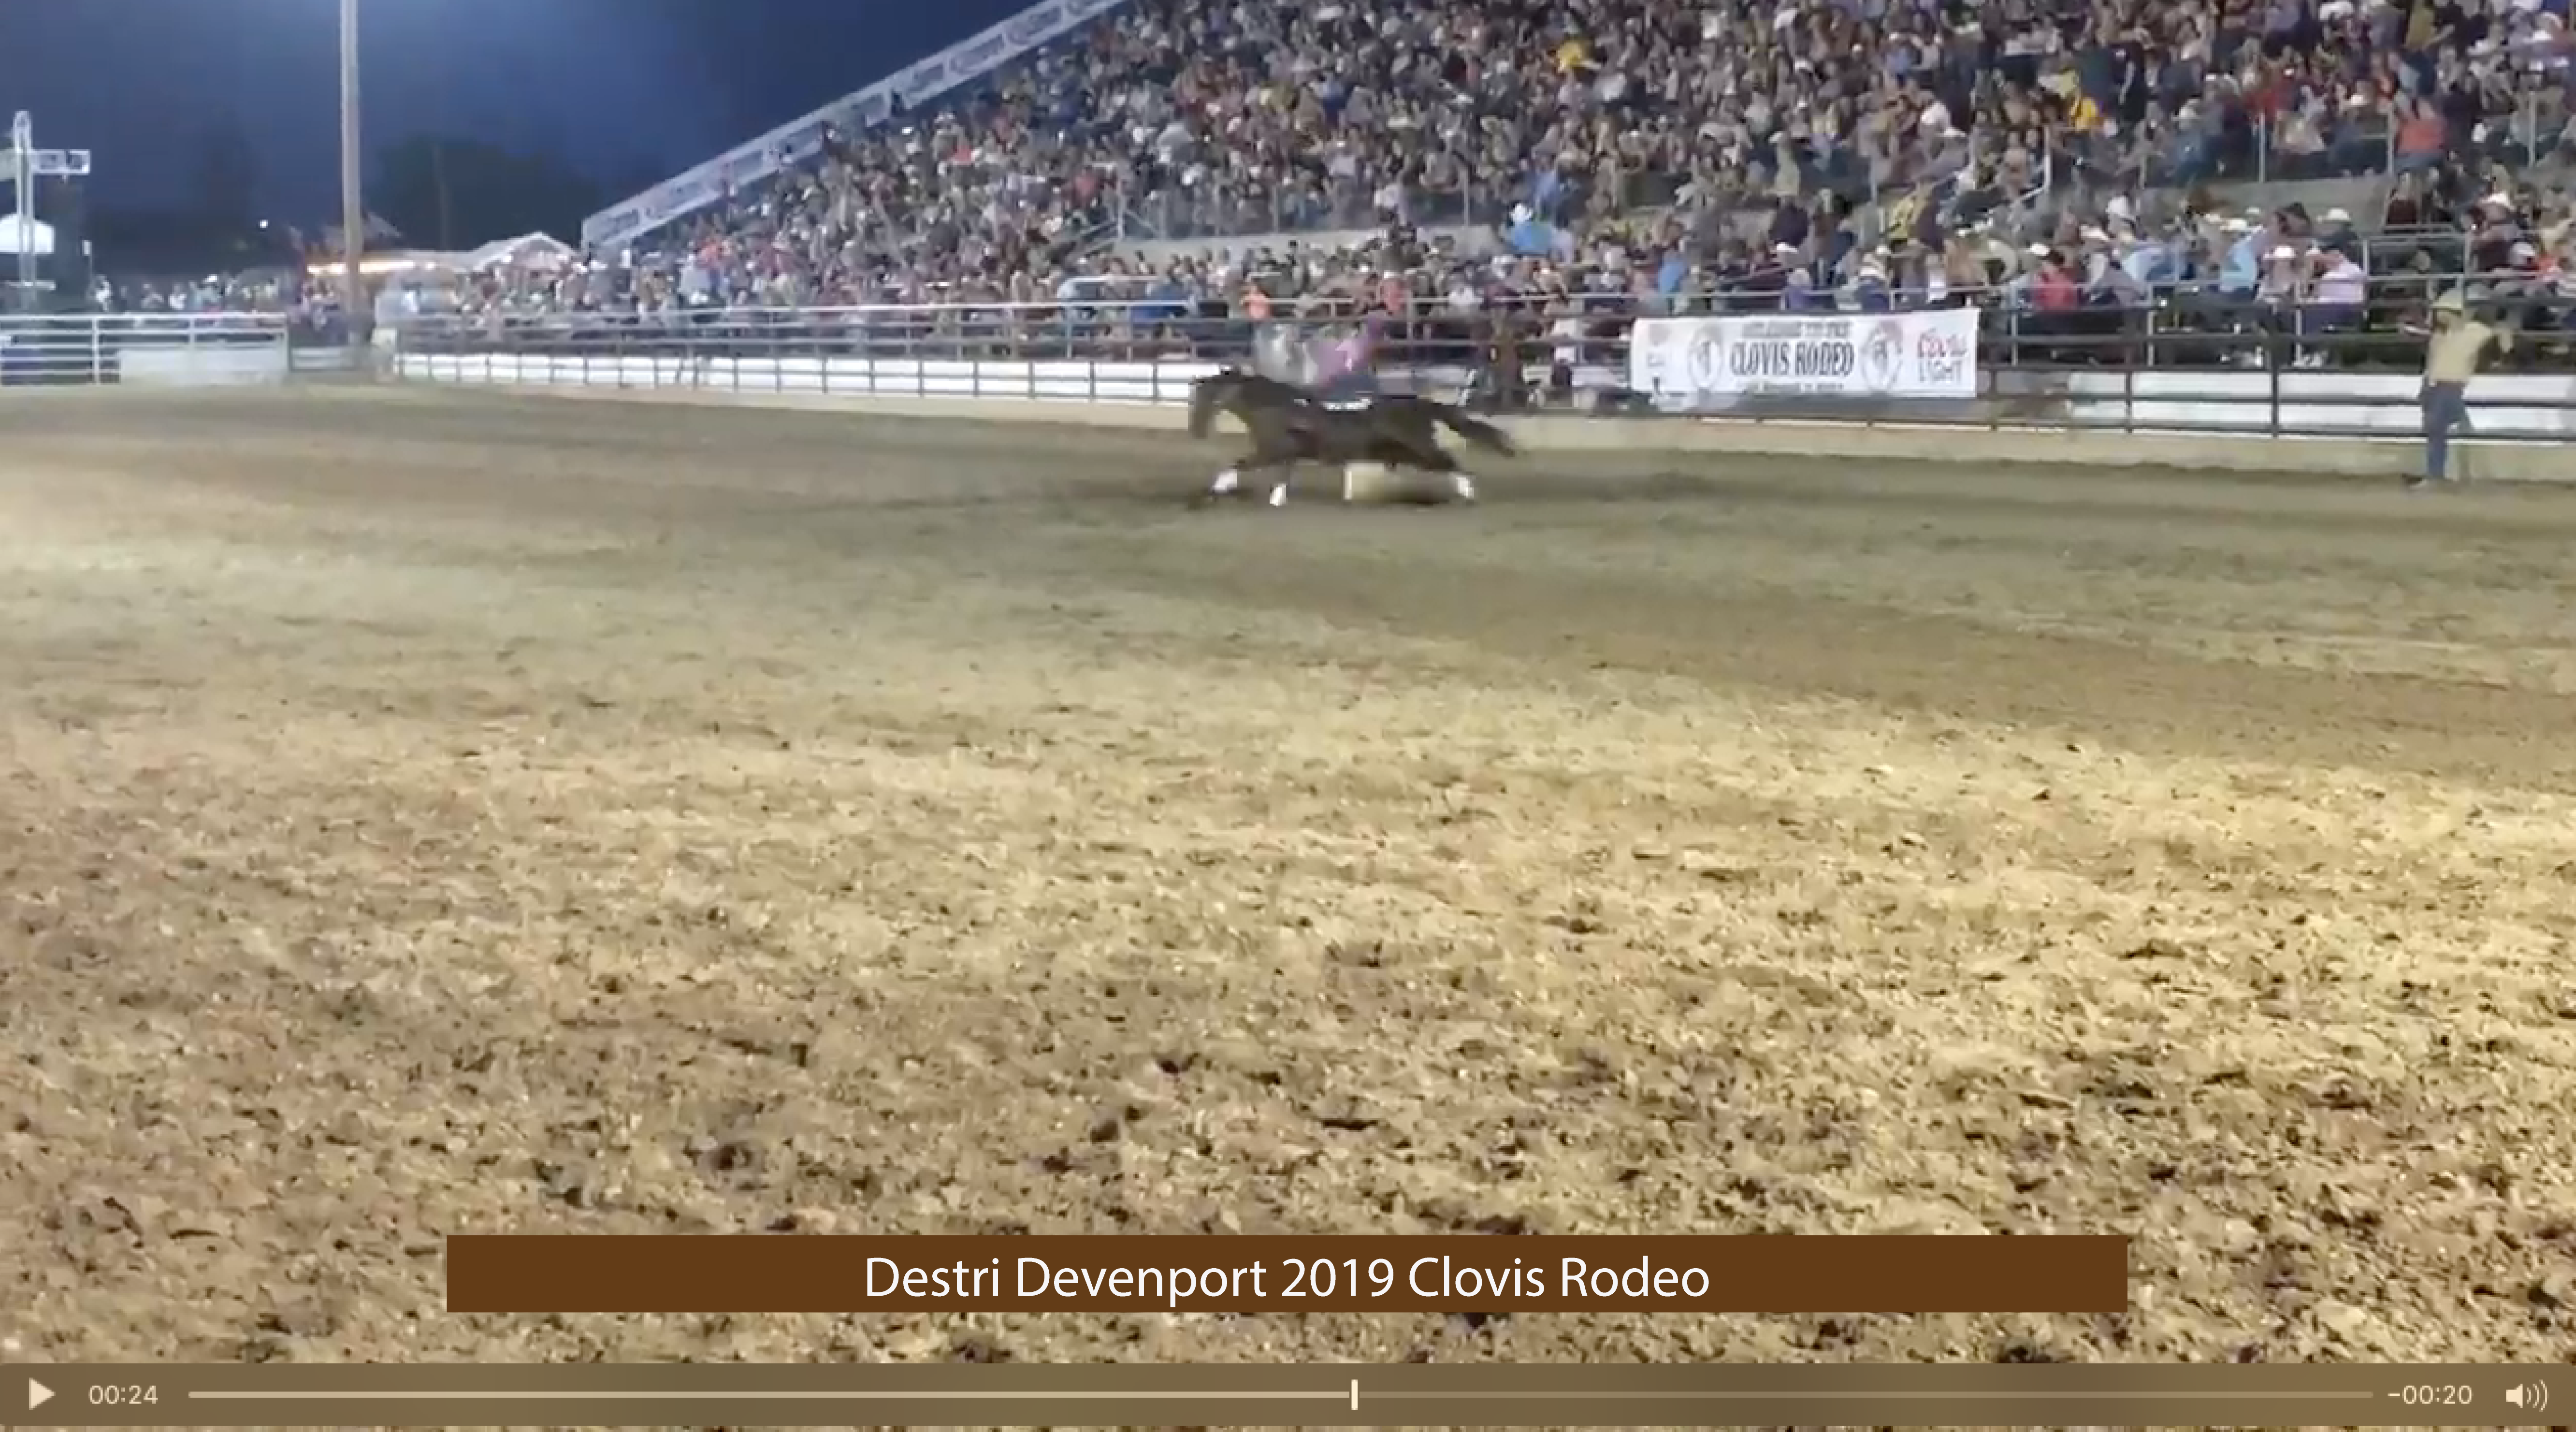 Destri Devenport Clovis 2019